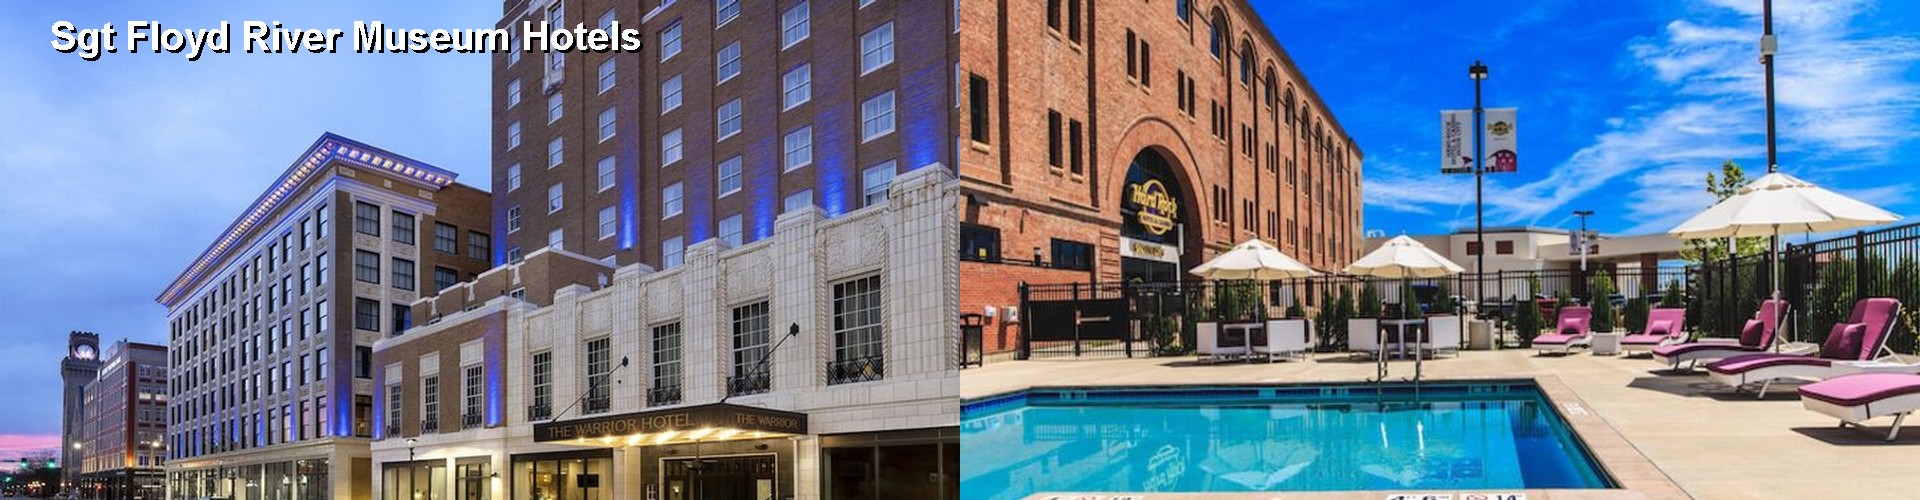 4 Best Hotels near Sgt Floyd River Museum